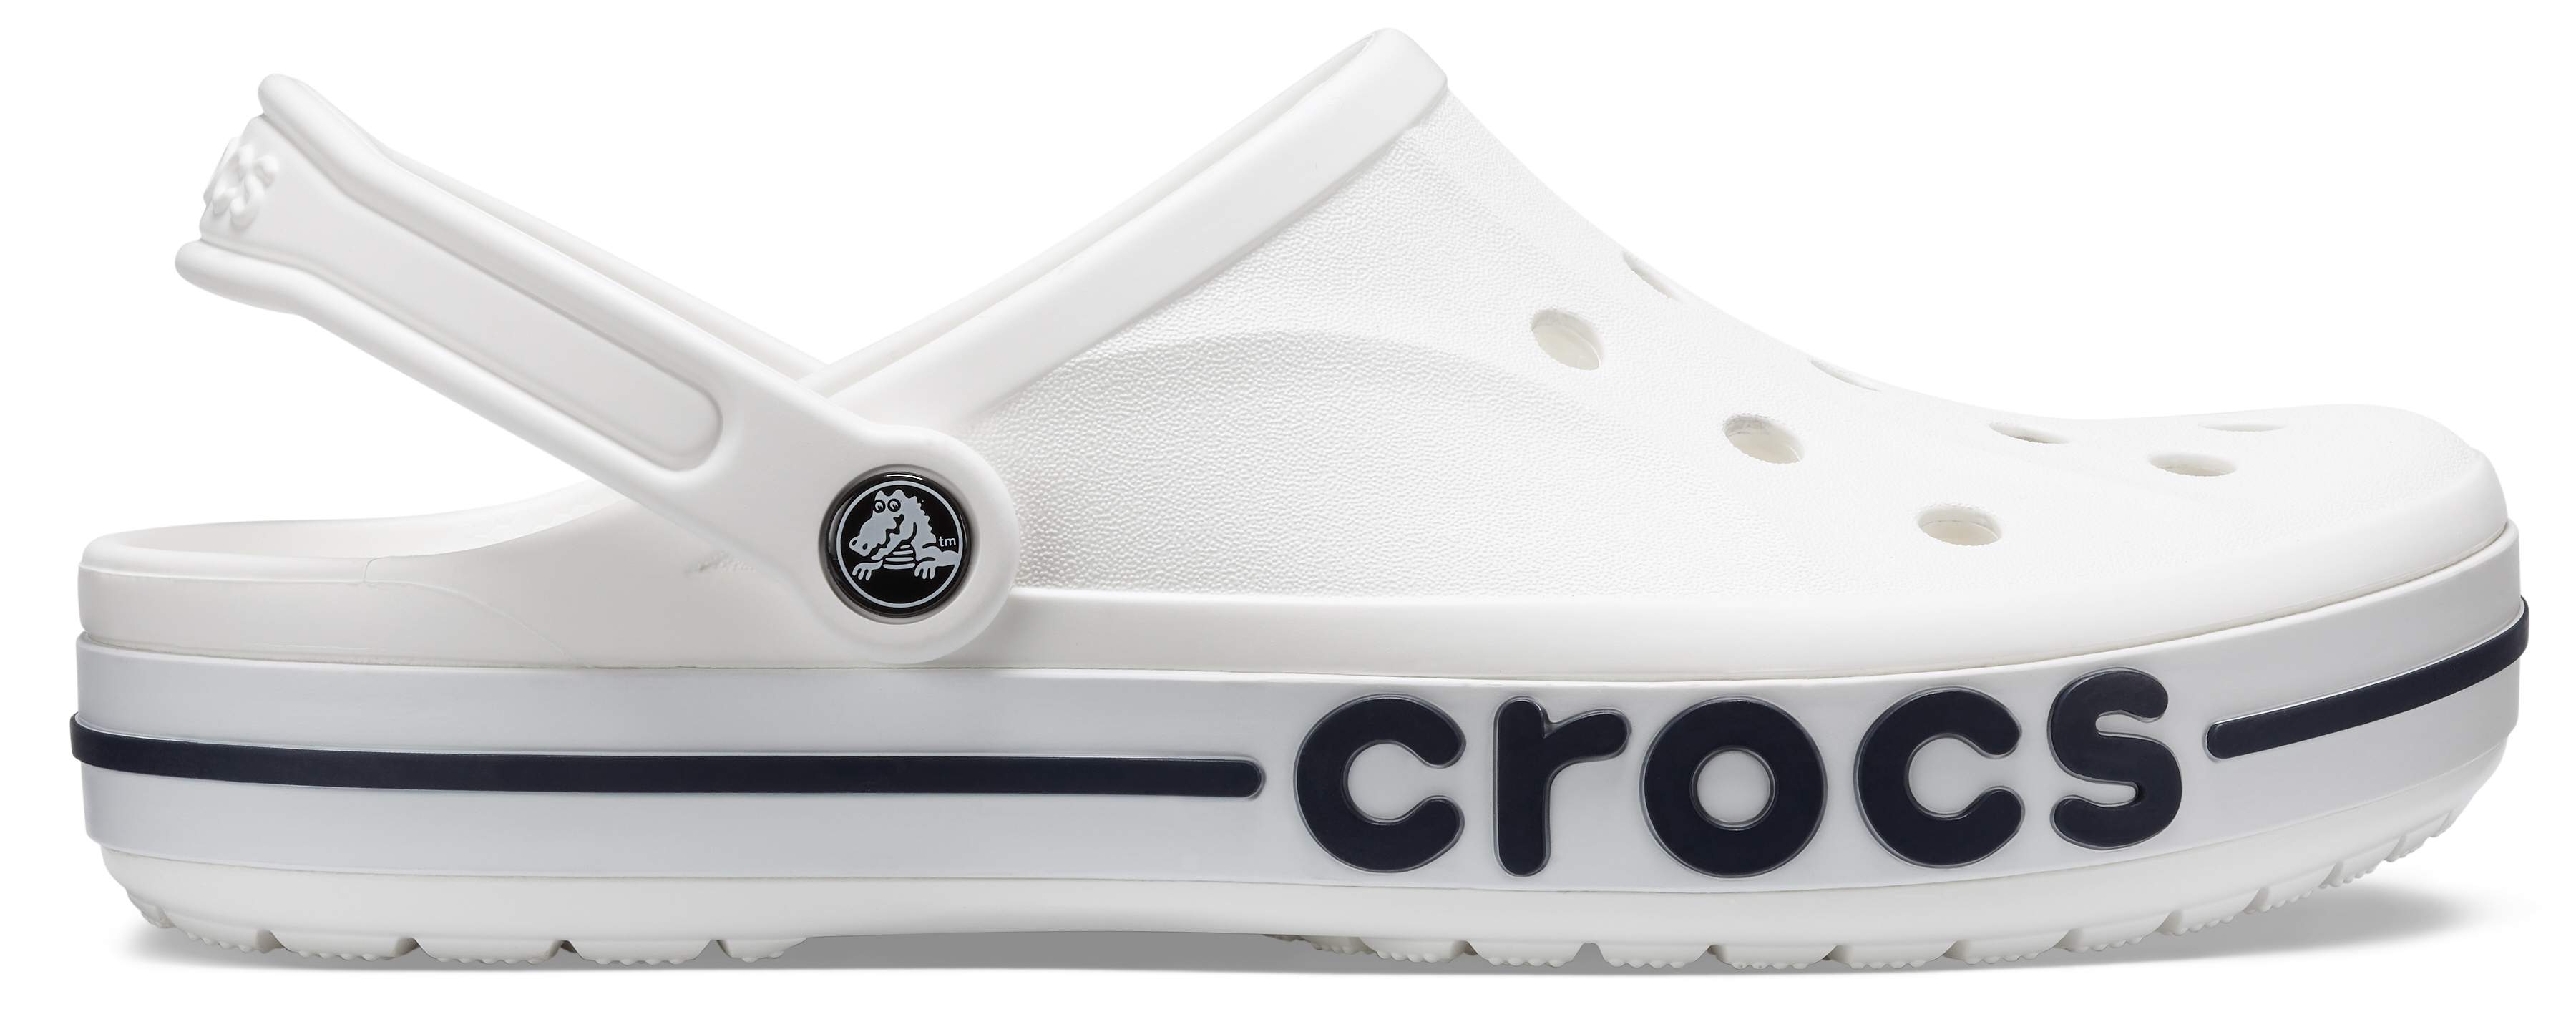 Crocs Unissex bayaband Clogs | eBay